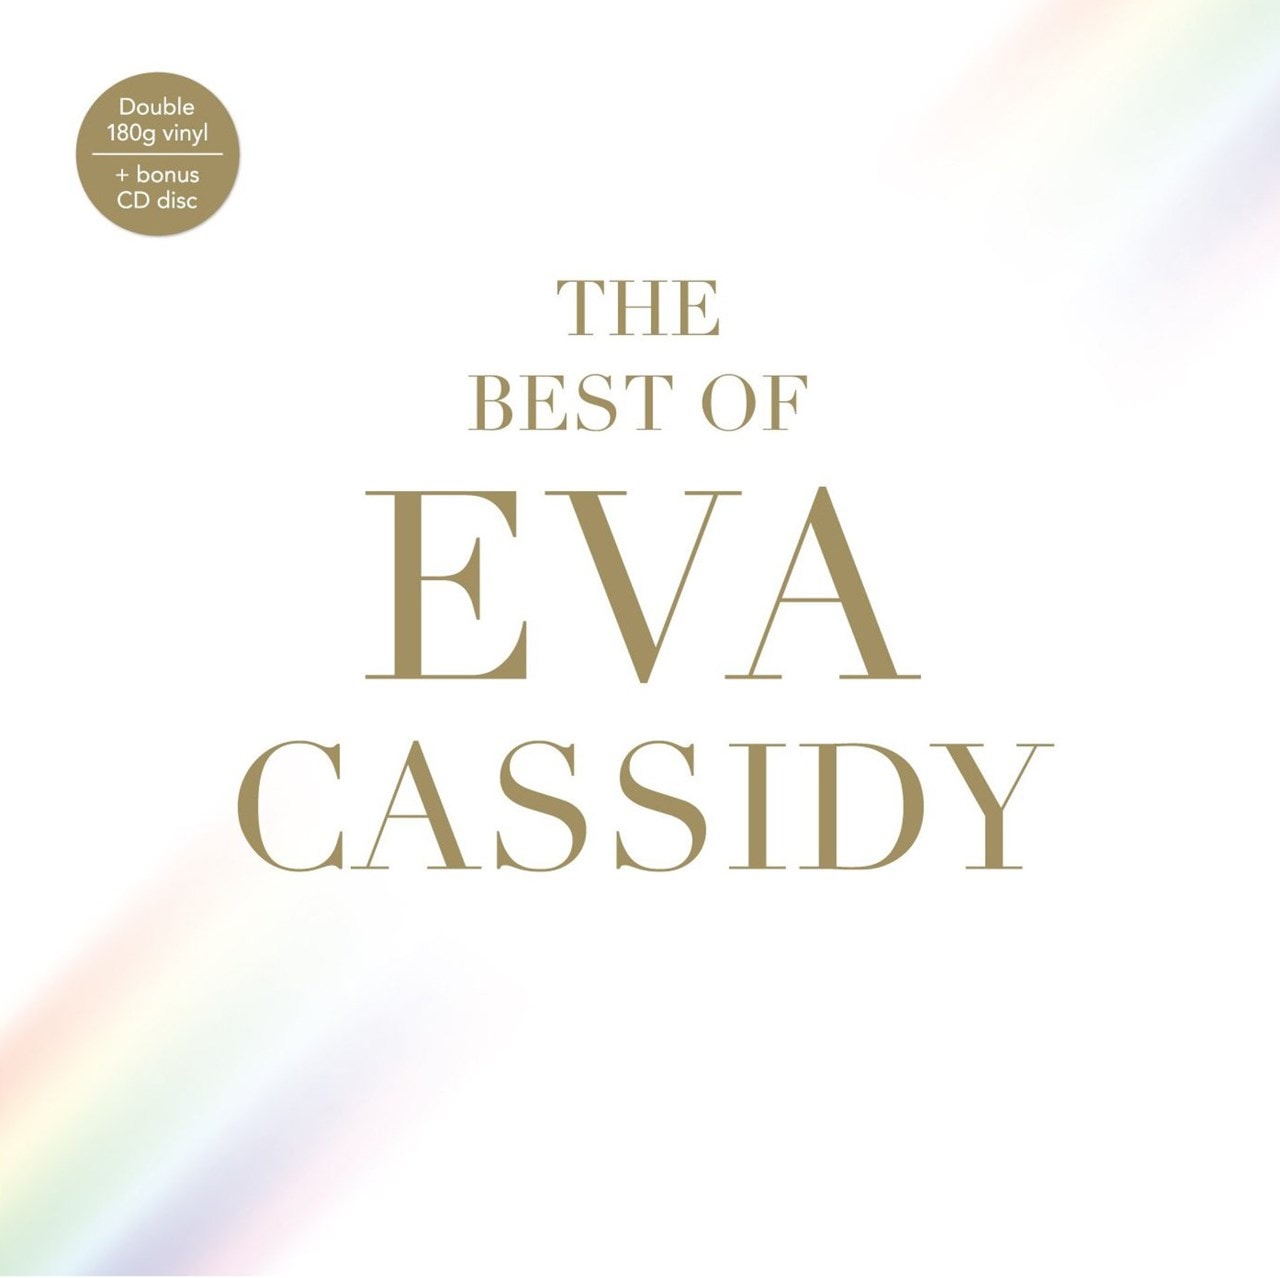 The Best Of Eva Cassidy 12 Vinyl Cd Album Free Shipping Over £20 Hmv Store